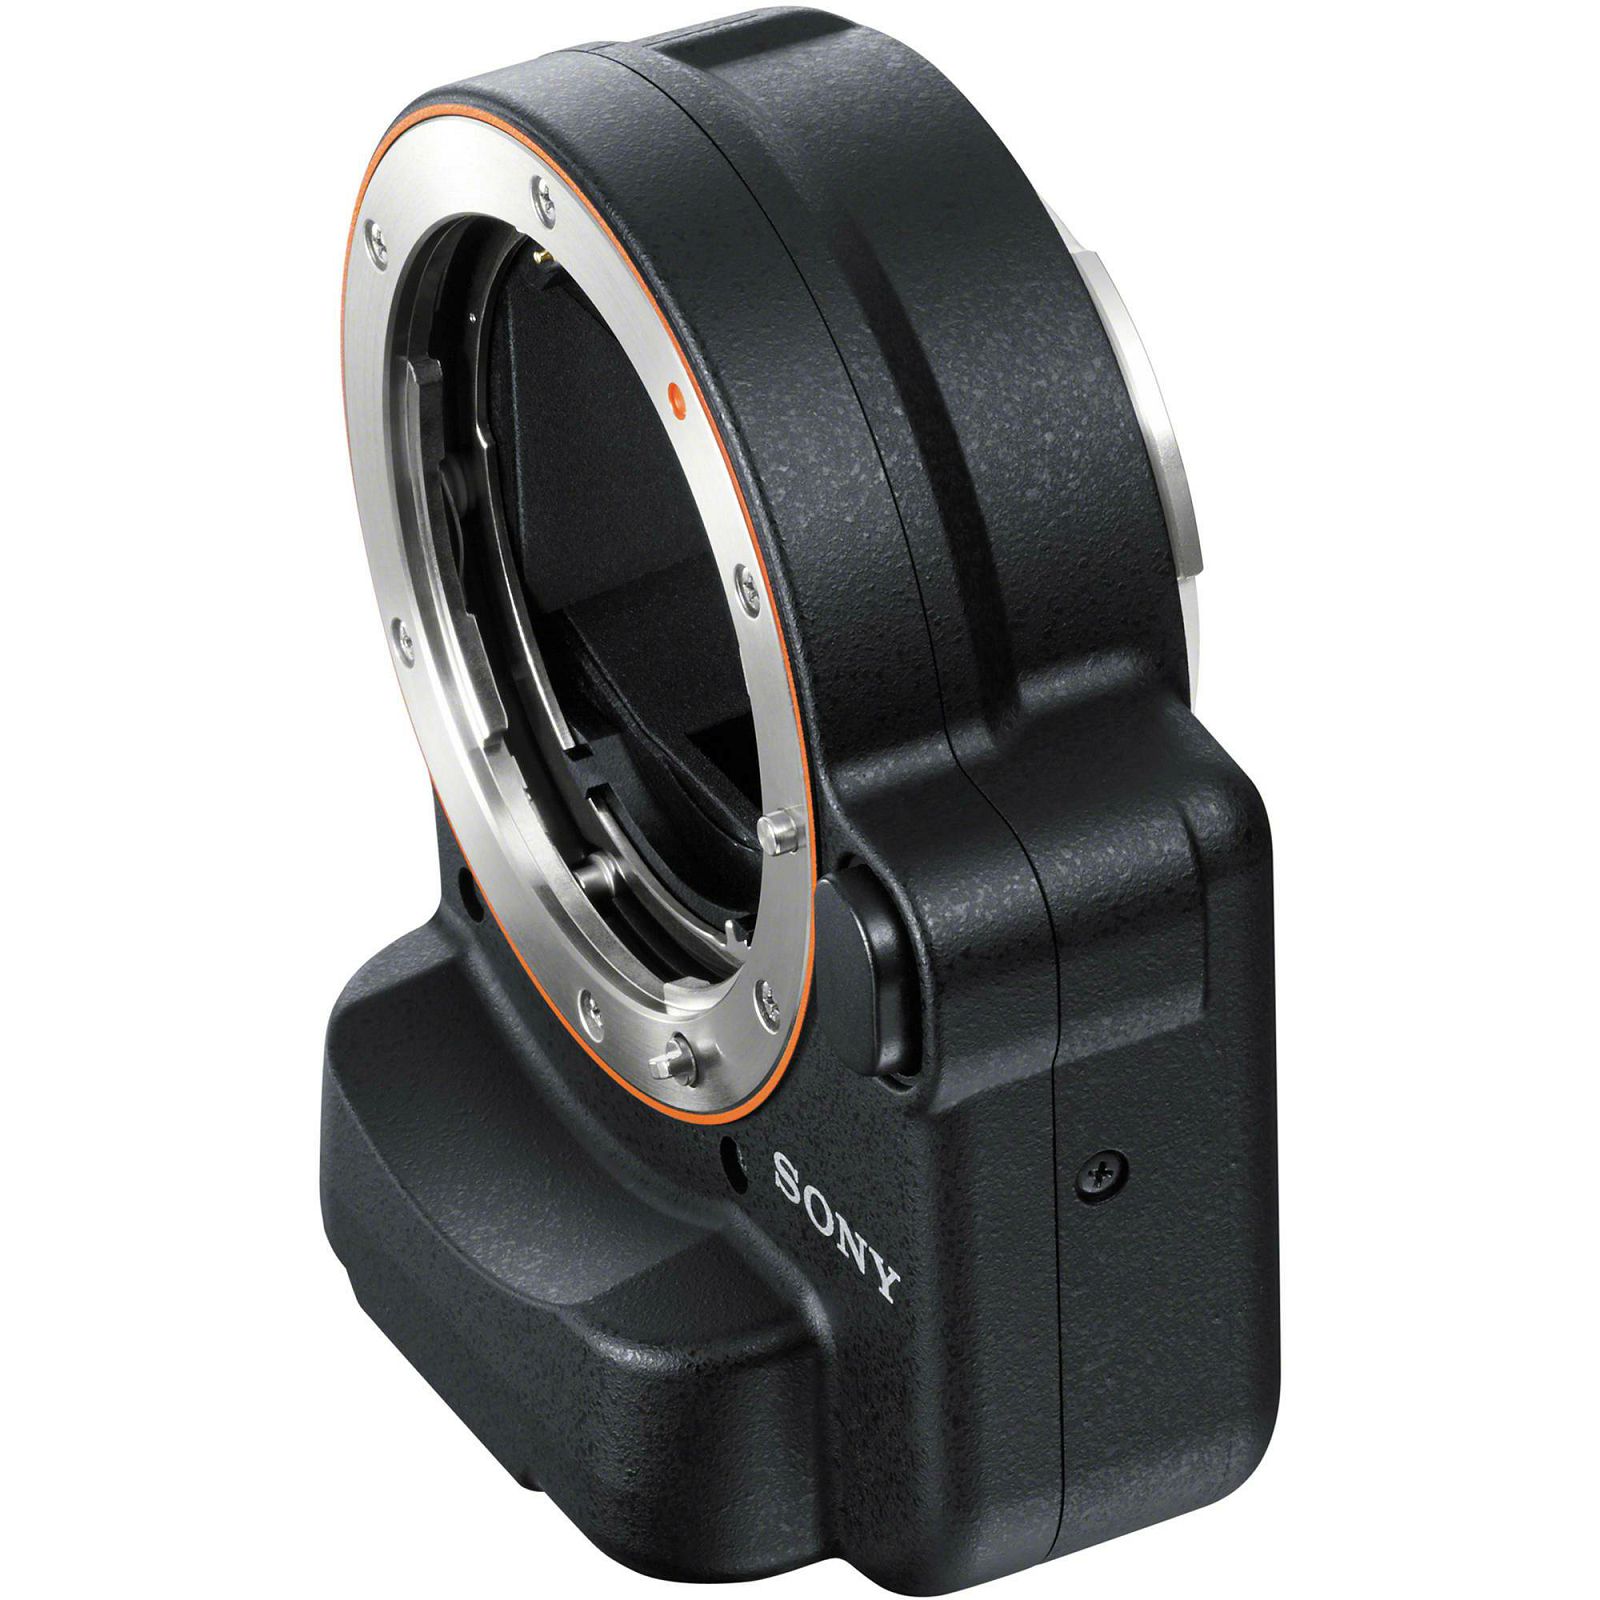 Sony LAEA4 A-Mount to E-Mount Lens Adapter with Translucent Mirror Technology LA-EA4 (LAEA4.AE)